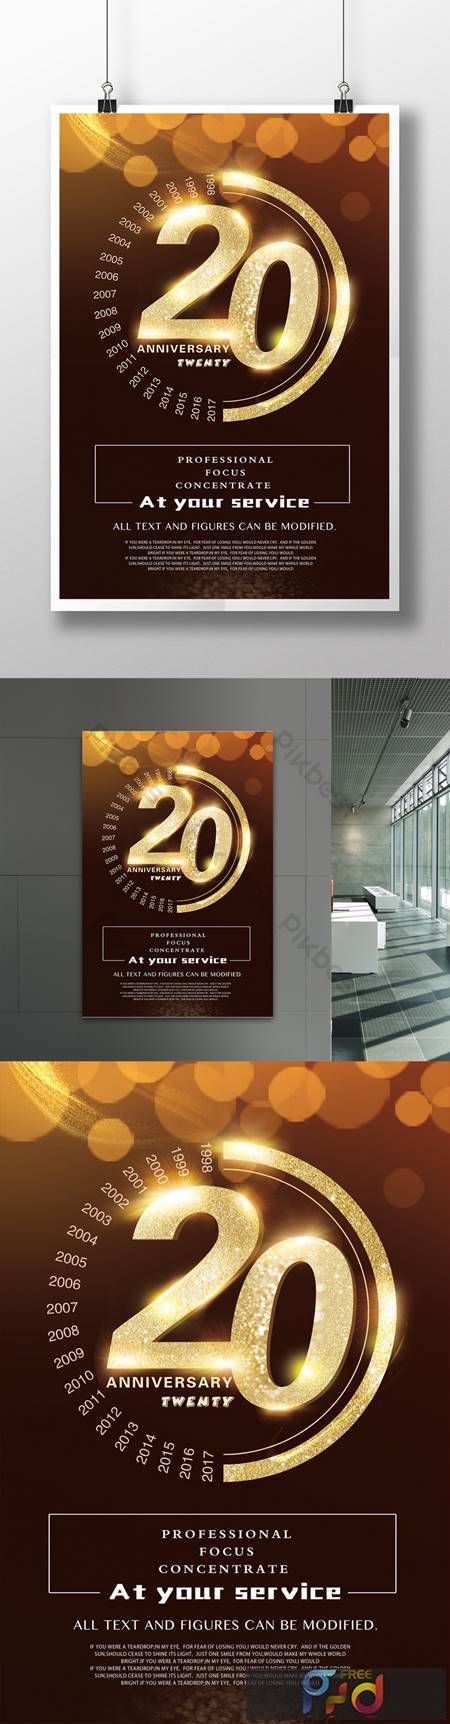 Creative high-end company anniversary corporate celebration poster design